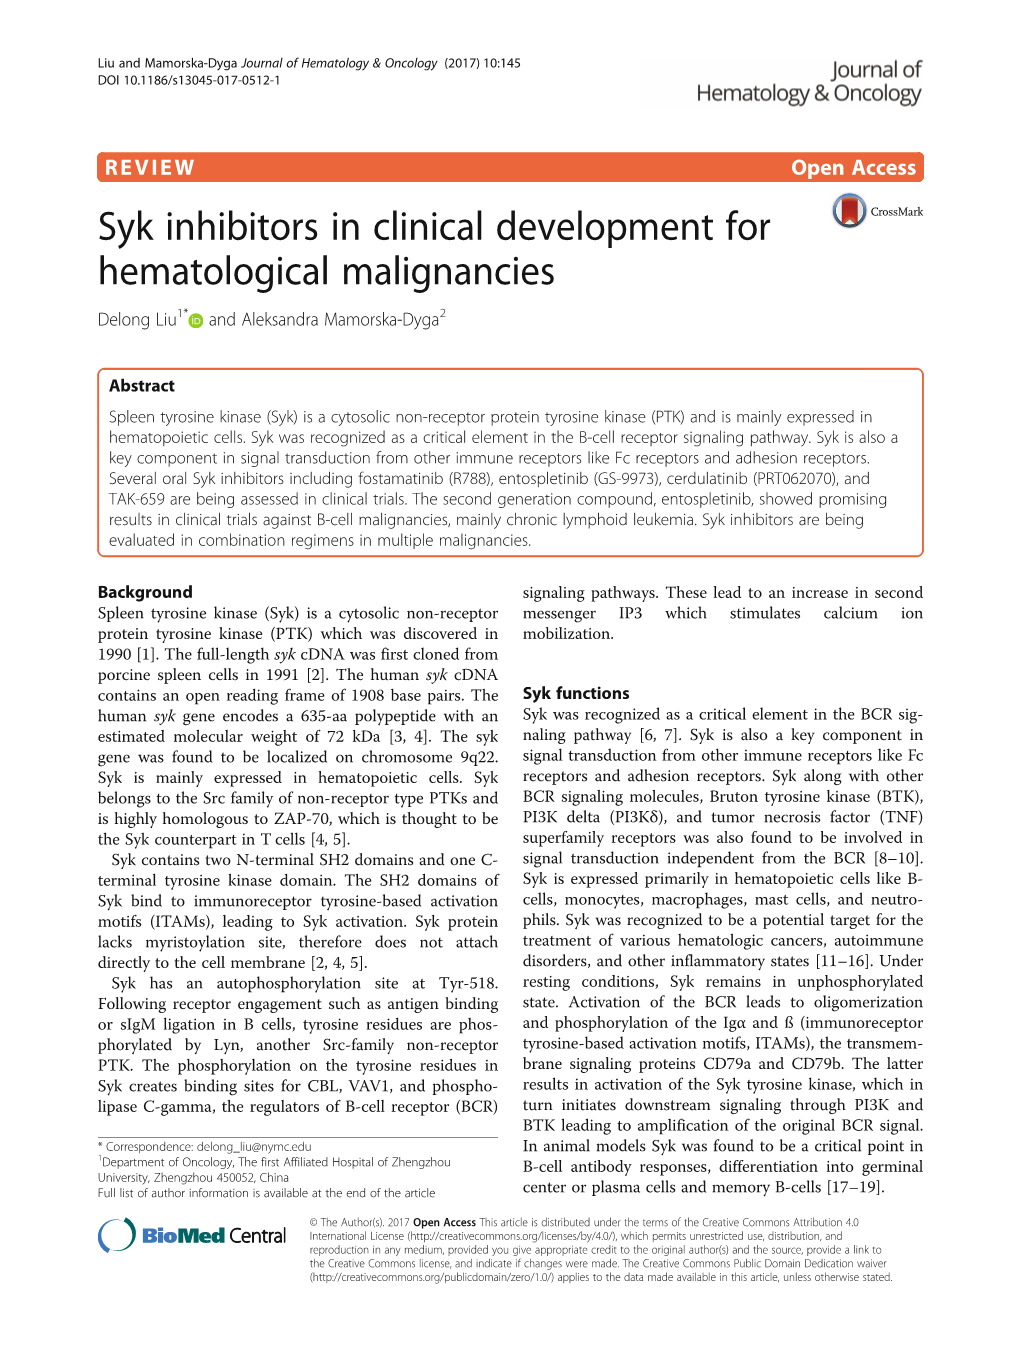 Syk Inhibitors in Clinical Development for Hematological Malignancies Delong Liu1* and Aleksandra Mamorska-Dyga2